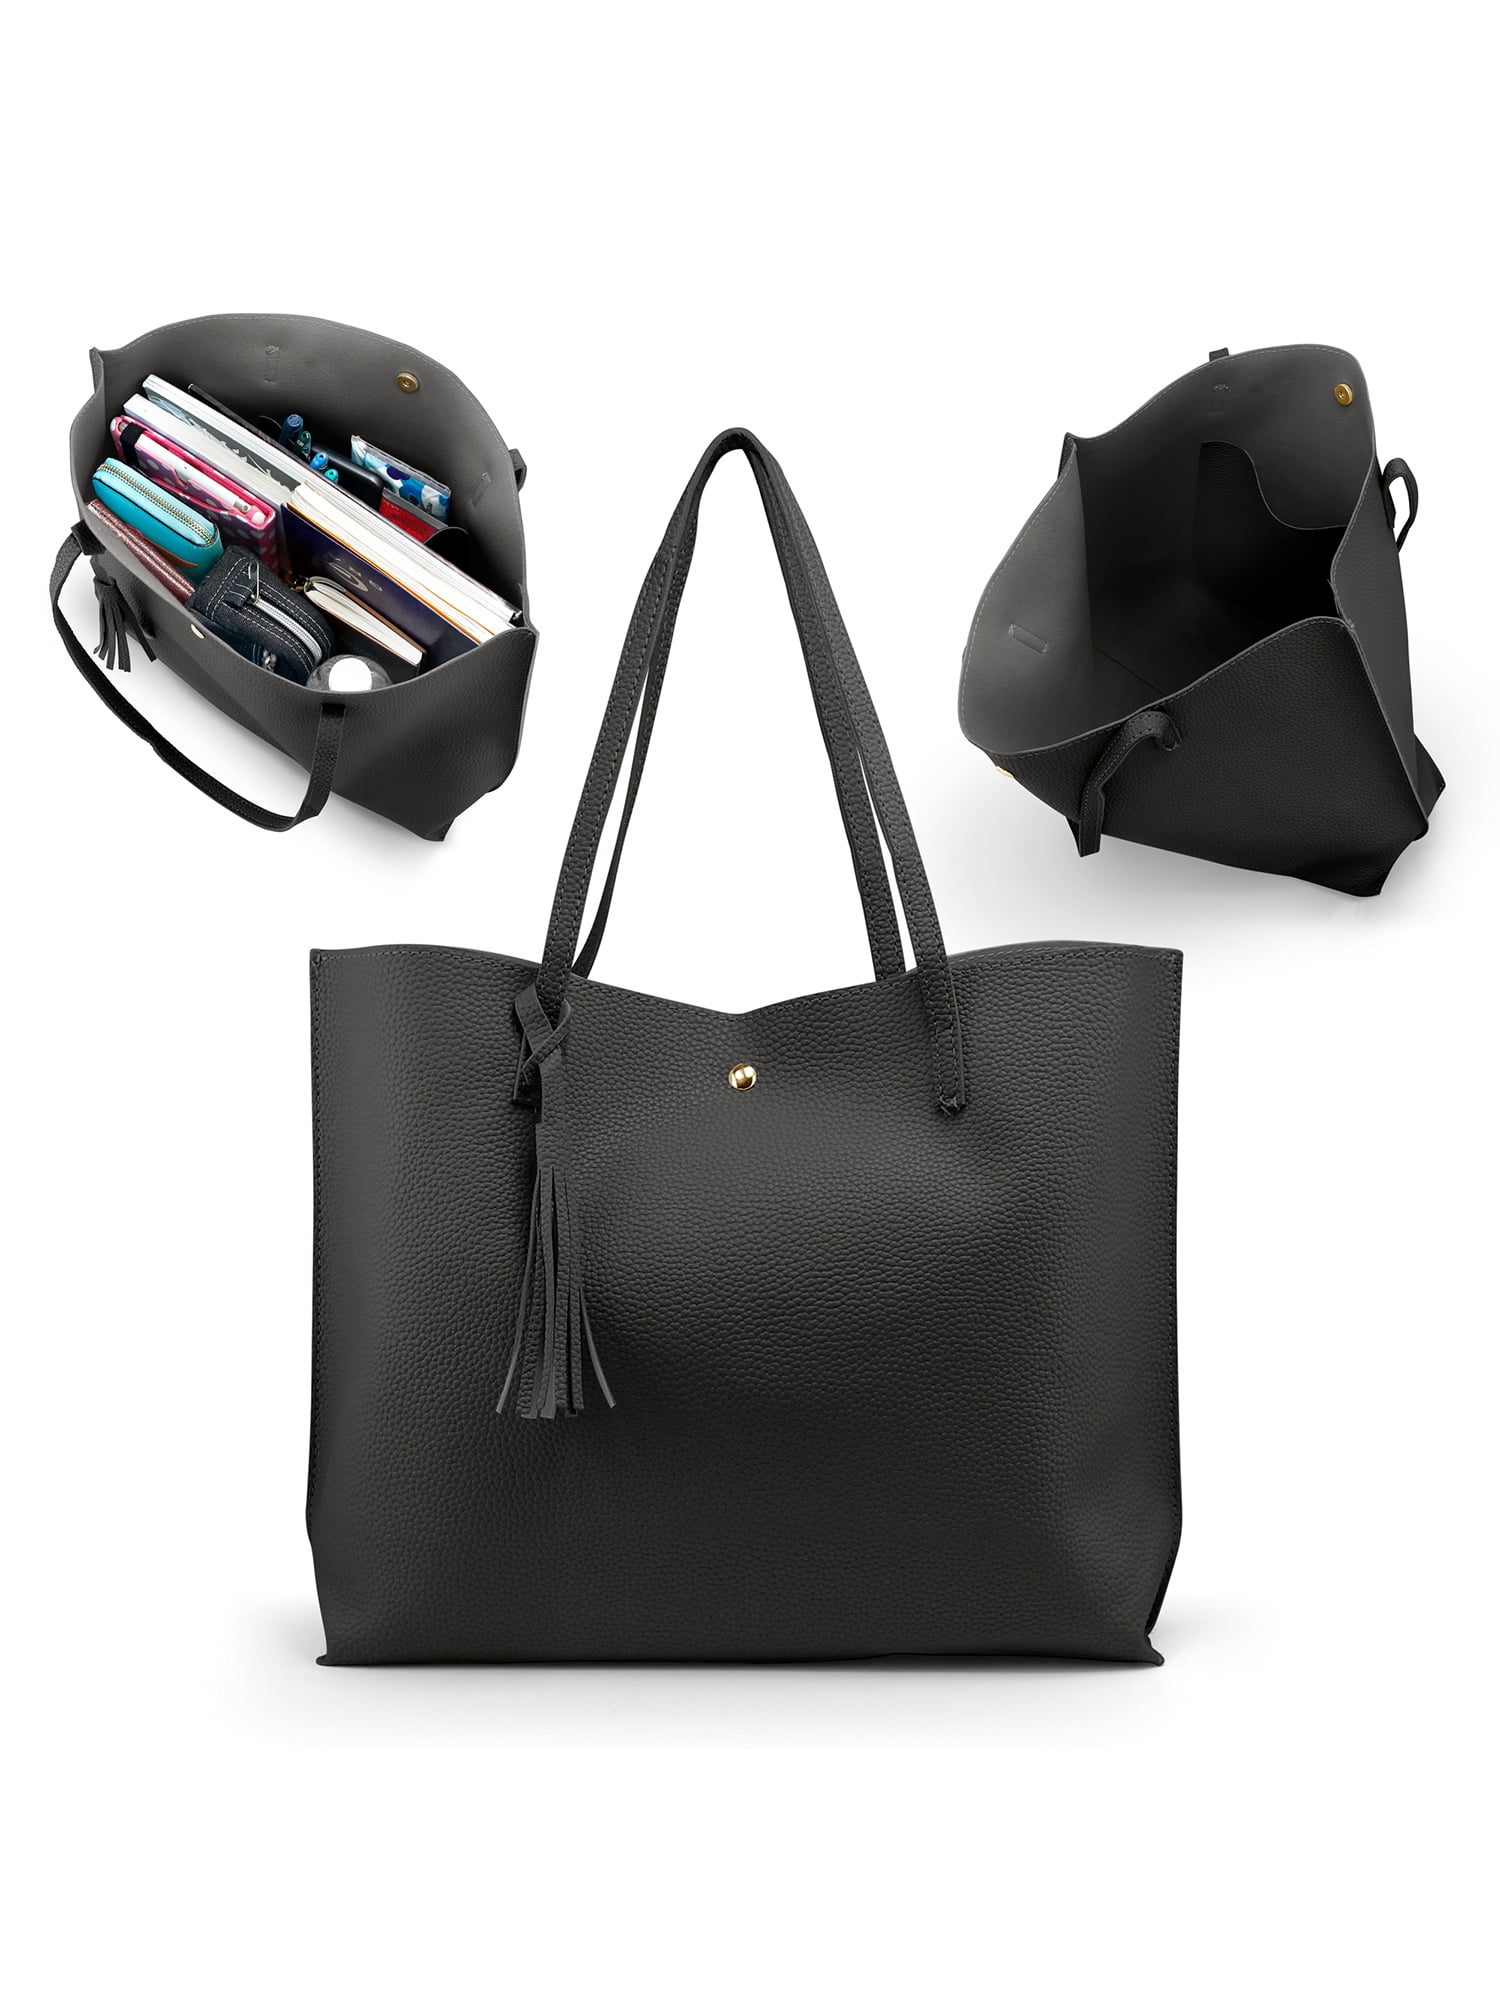 Women Handbag PU Leather Tote Messenger Tassel Luxury Shoulder Crossbody Bag US